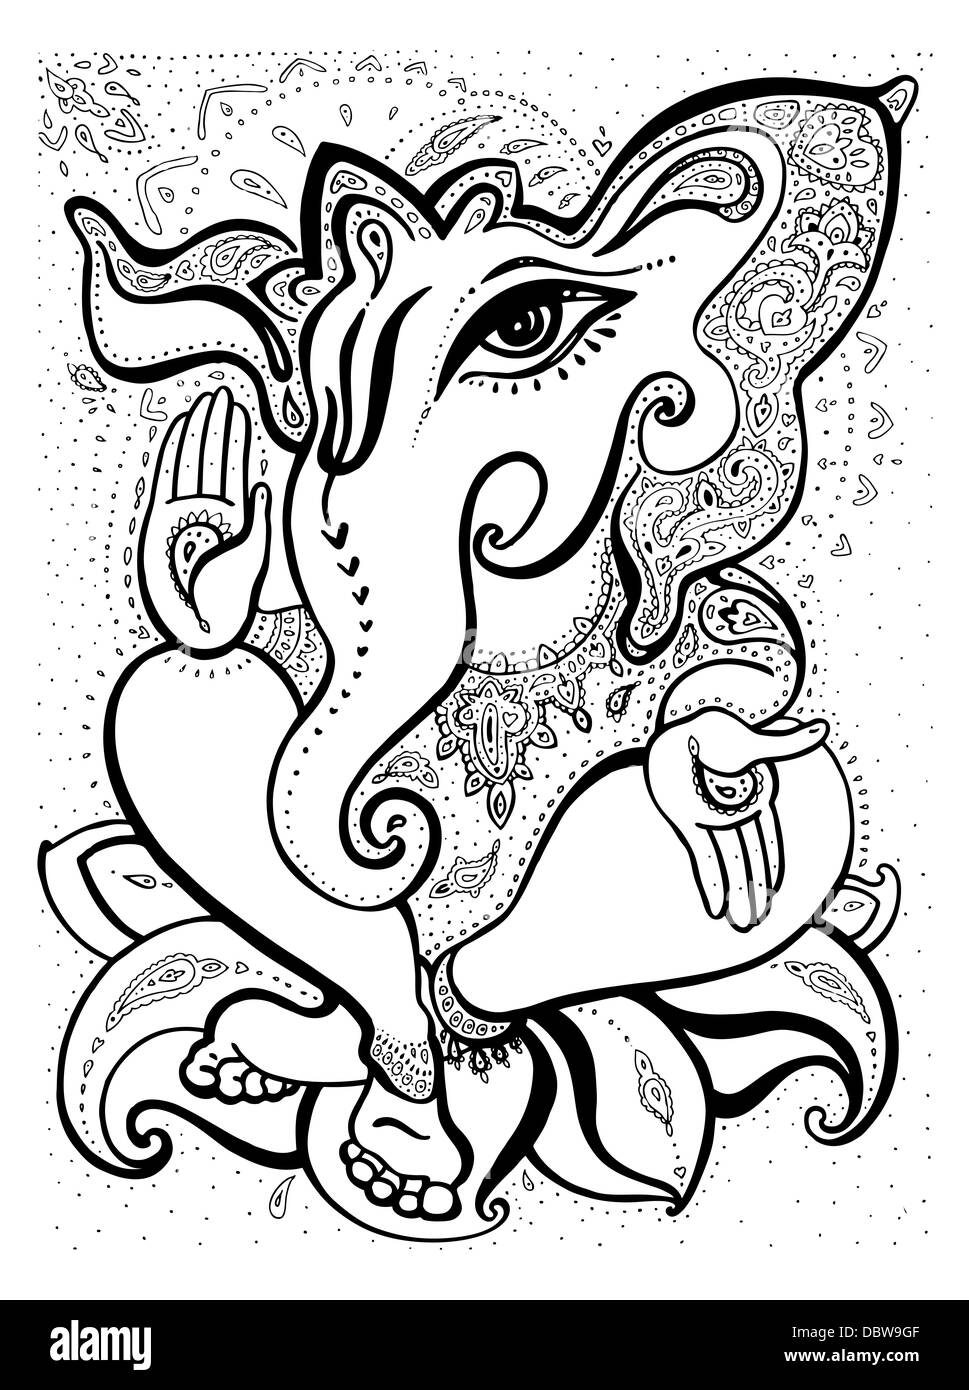 Ganesha Hand drawn illustration. Stock Photo